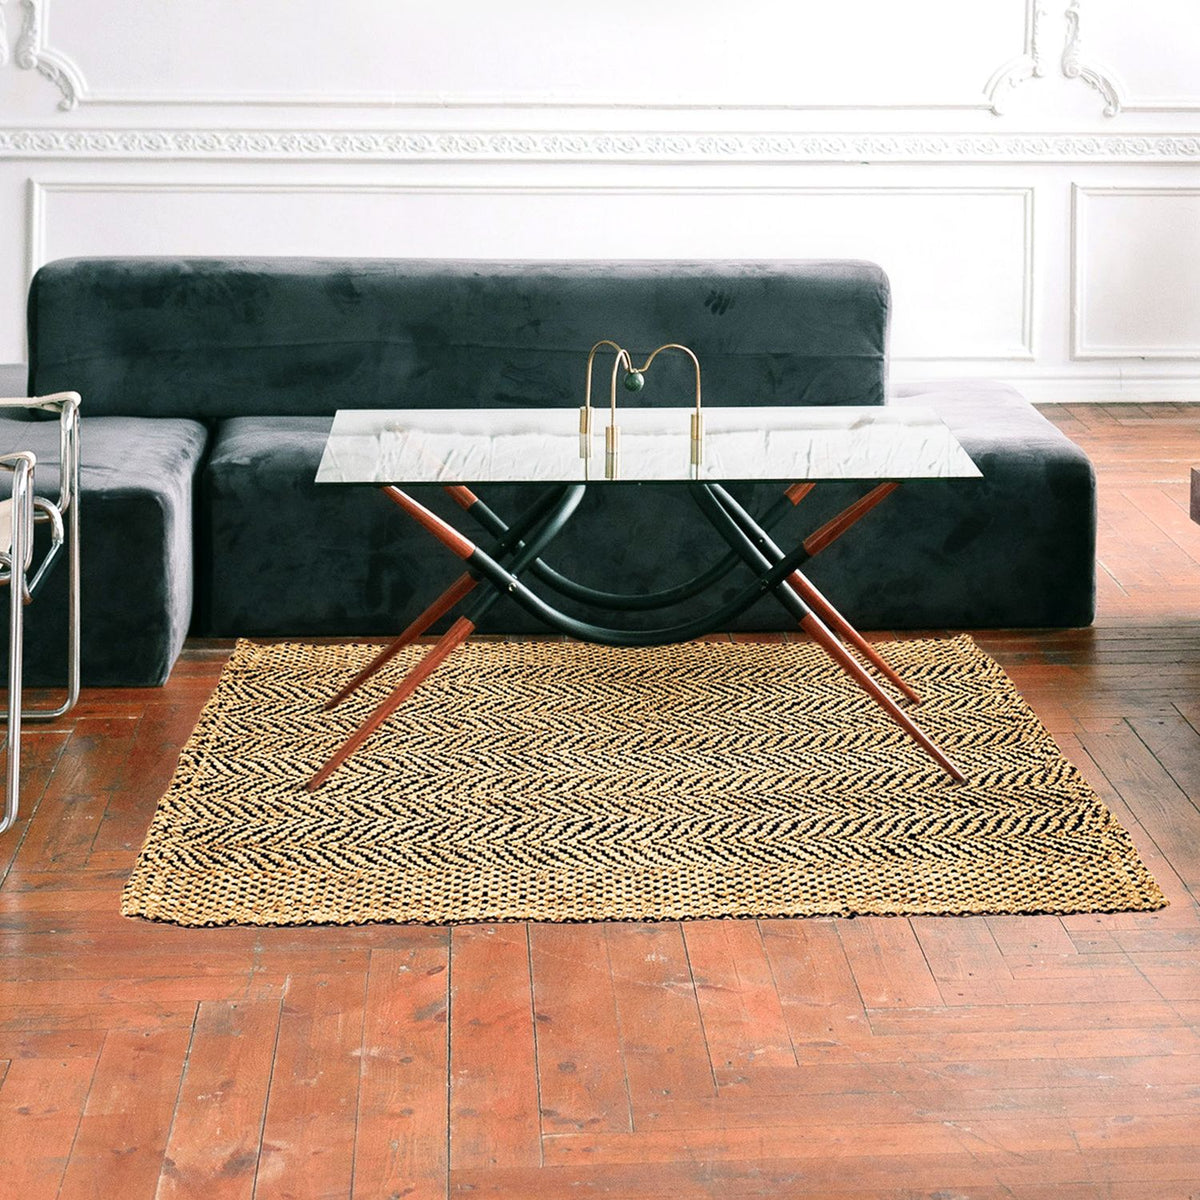 Chevron Luxe Rug - Natural and Black - Herringbone Weave - Jute Carpet